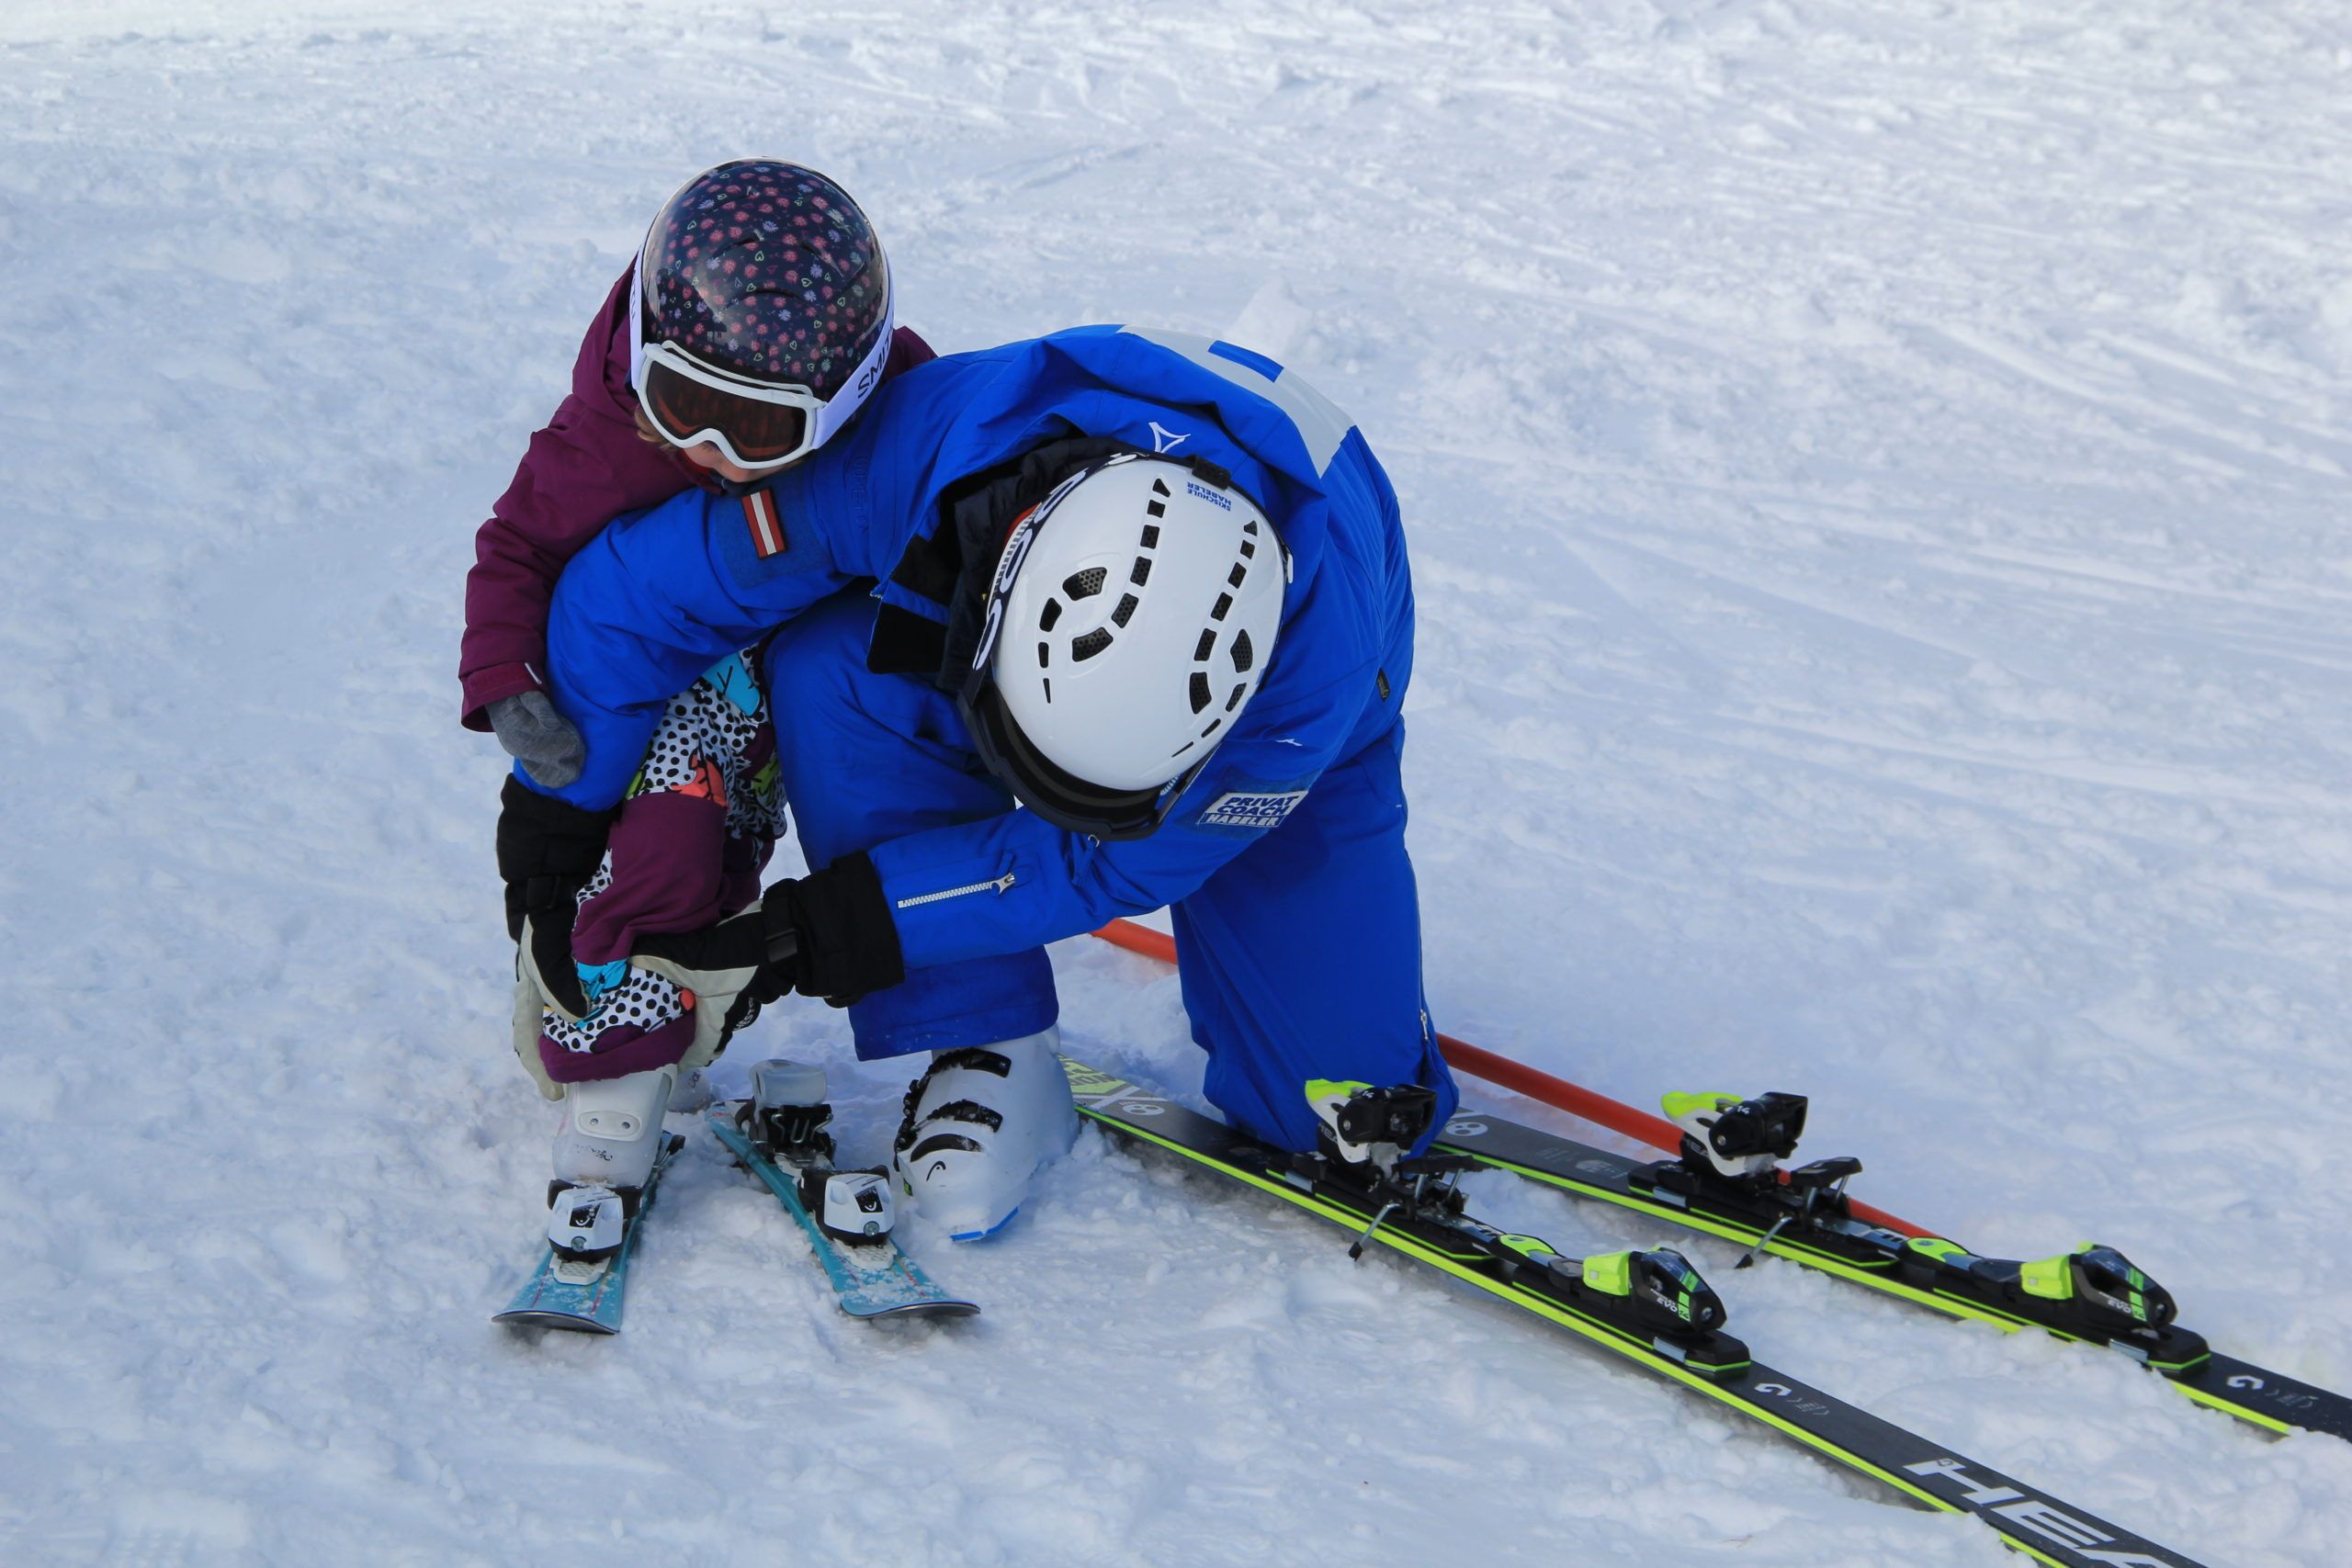 Equipment Check with Ski Courses Children